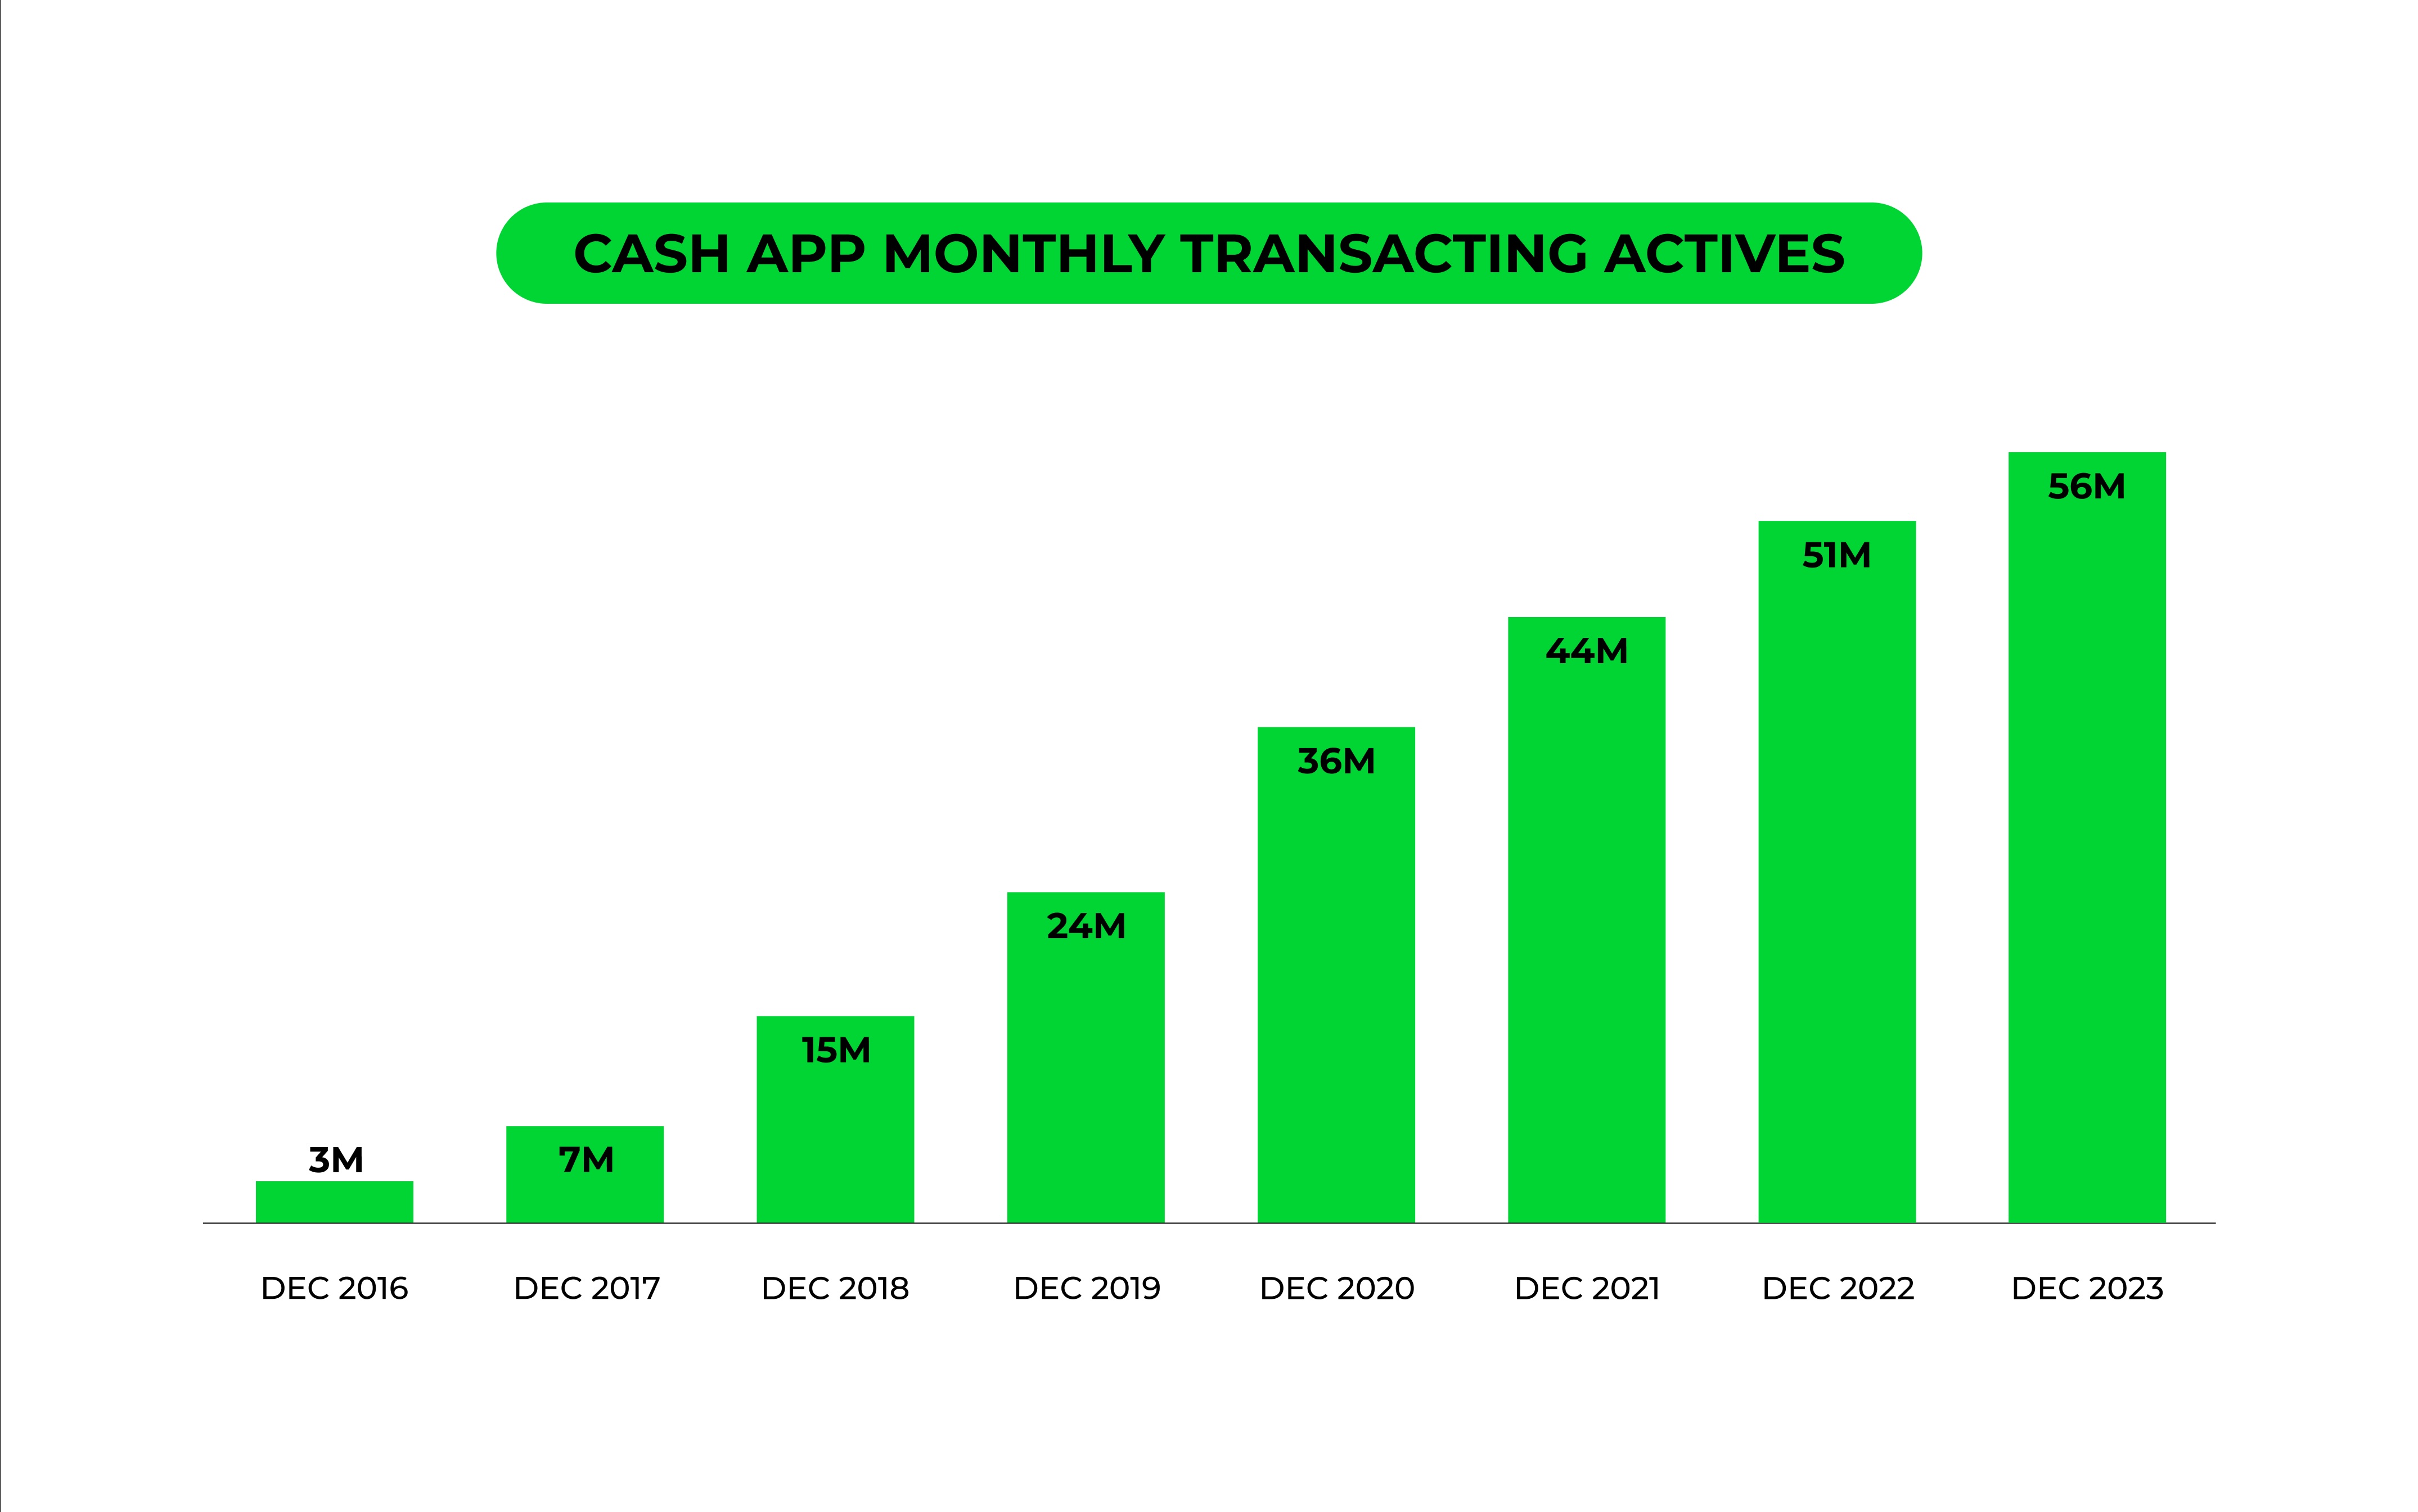 Cash App Transacting Actives Chart 2023 (1).jpg